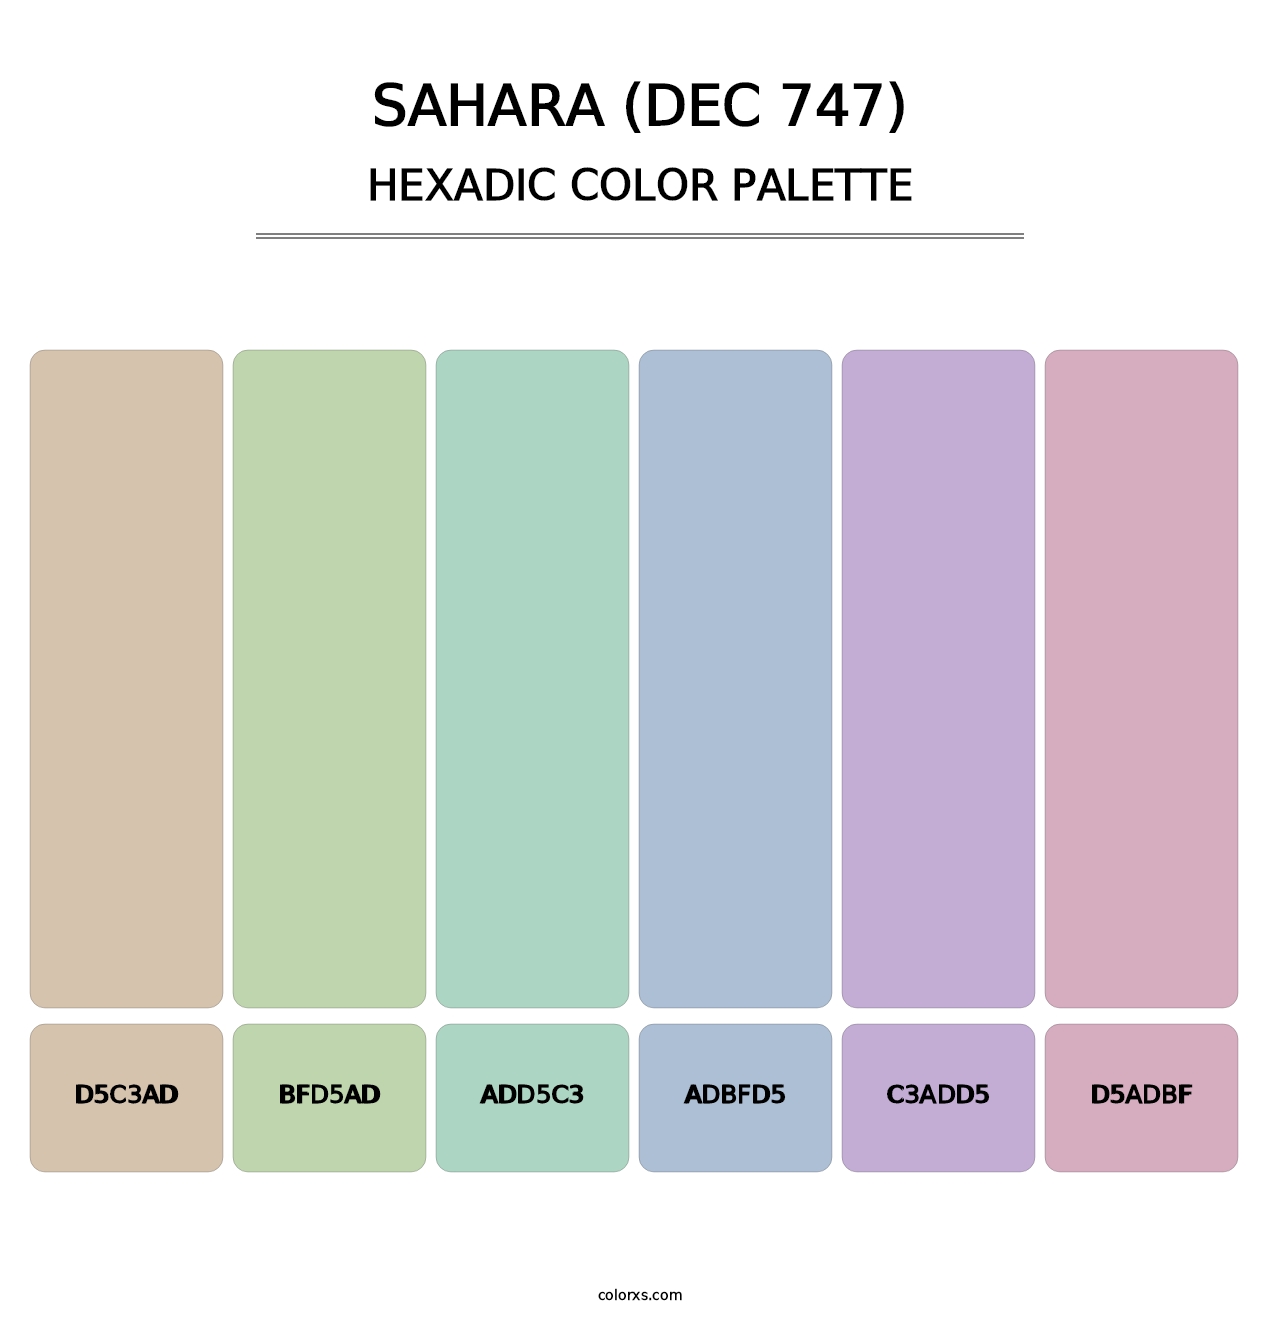 Sahara (DEC 747) - Hexadic Color Palette